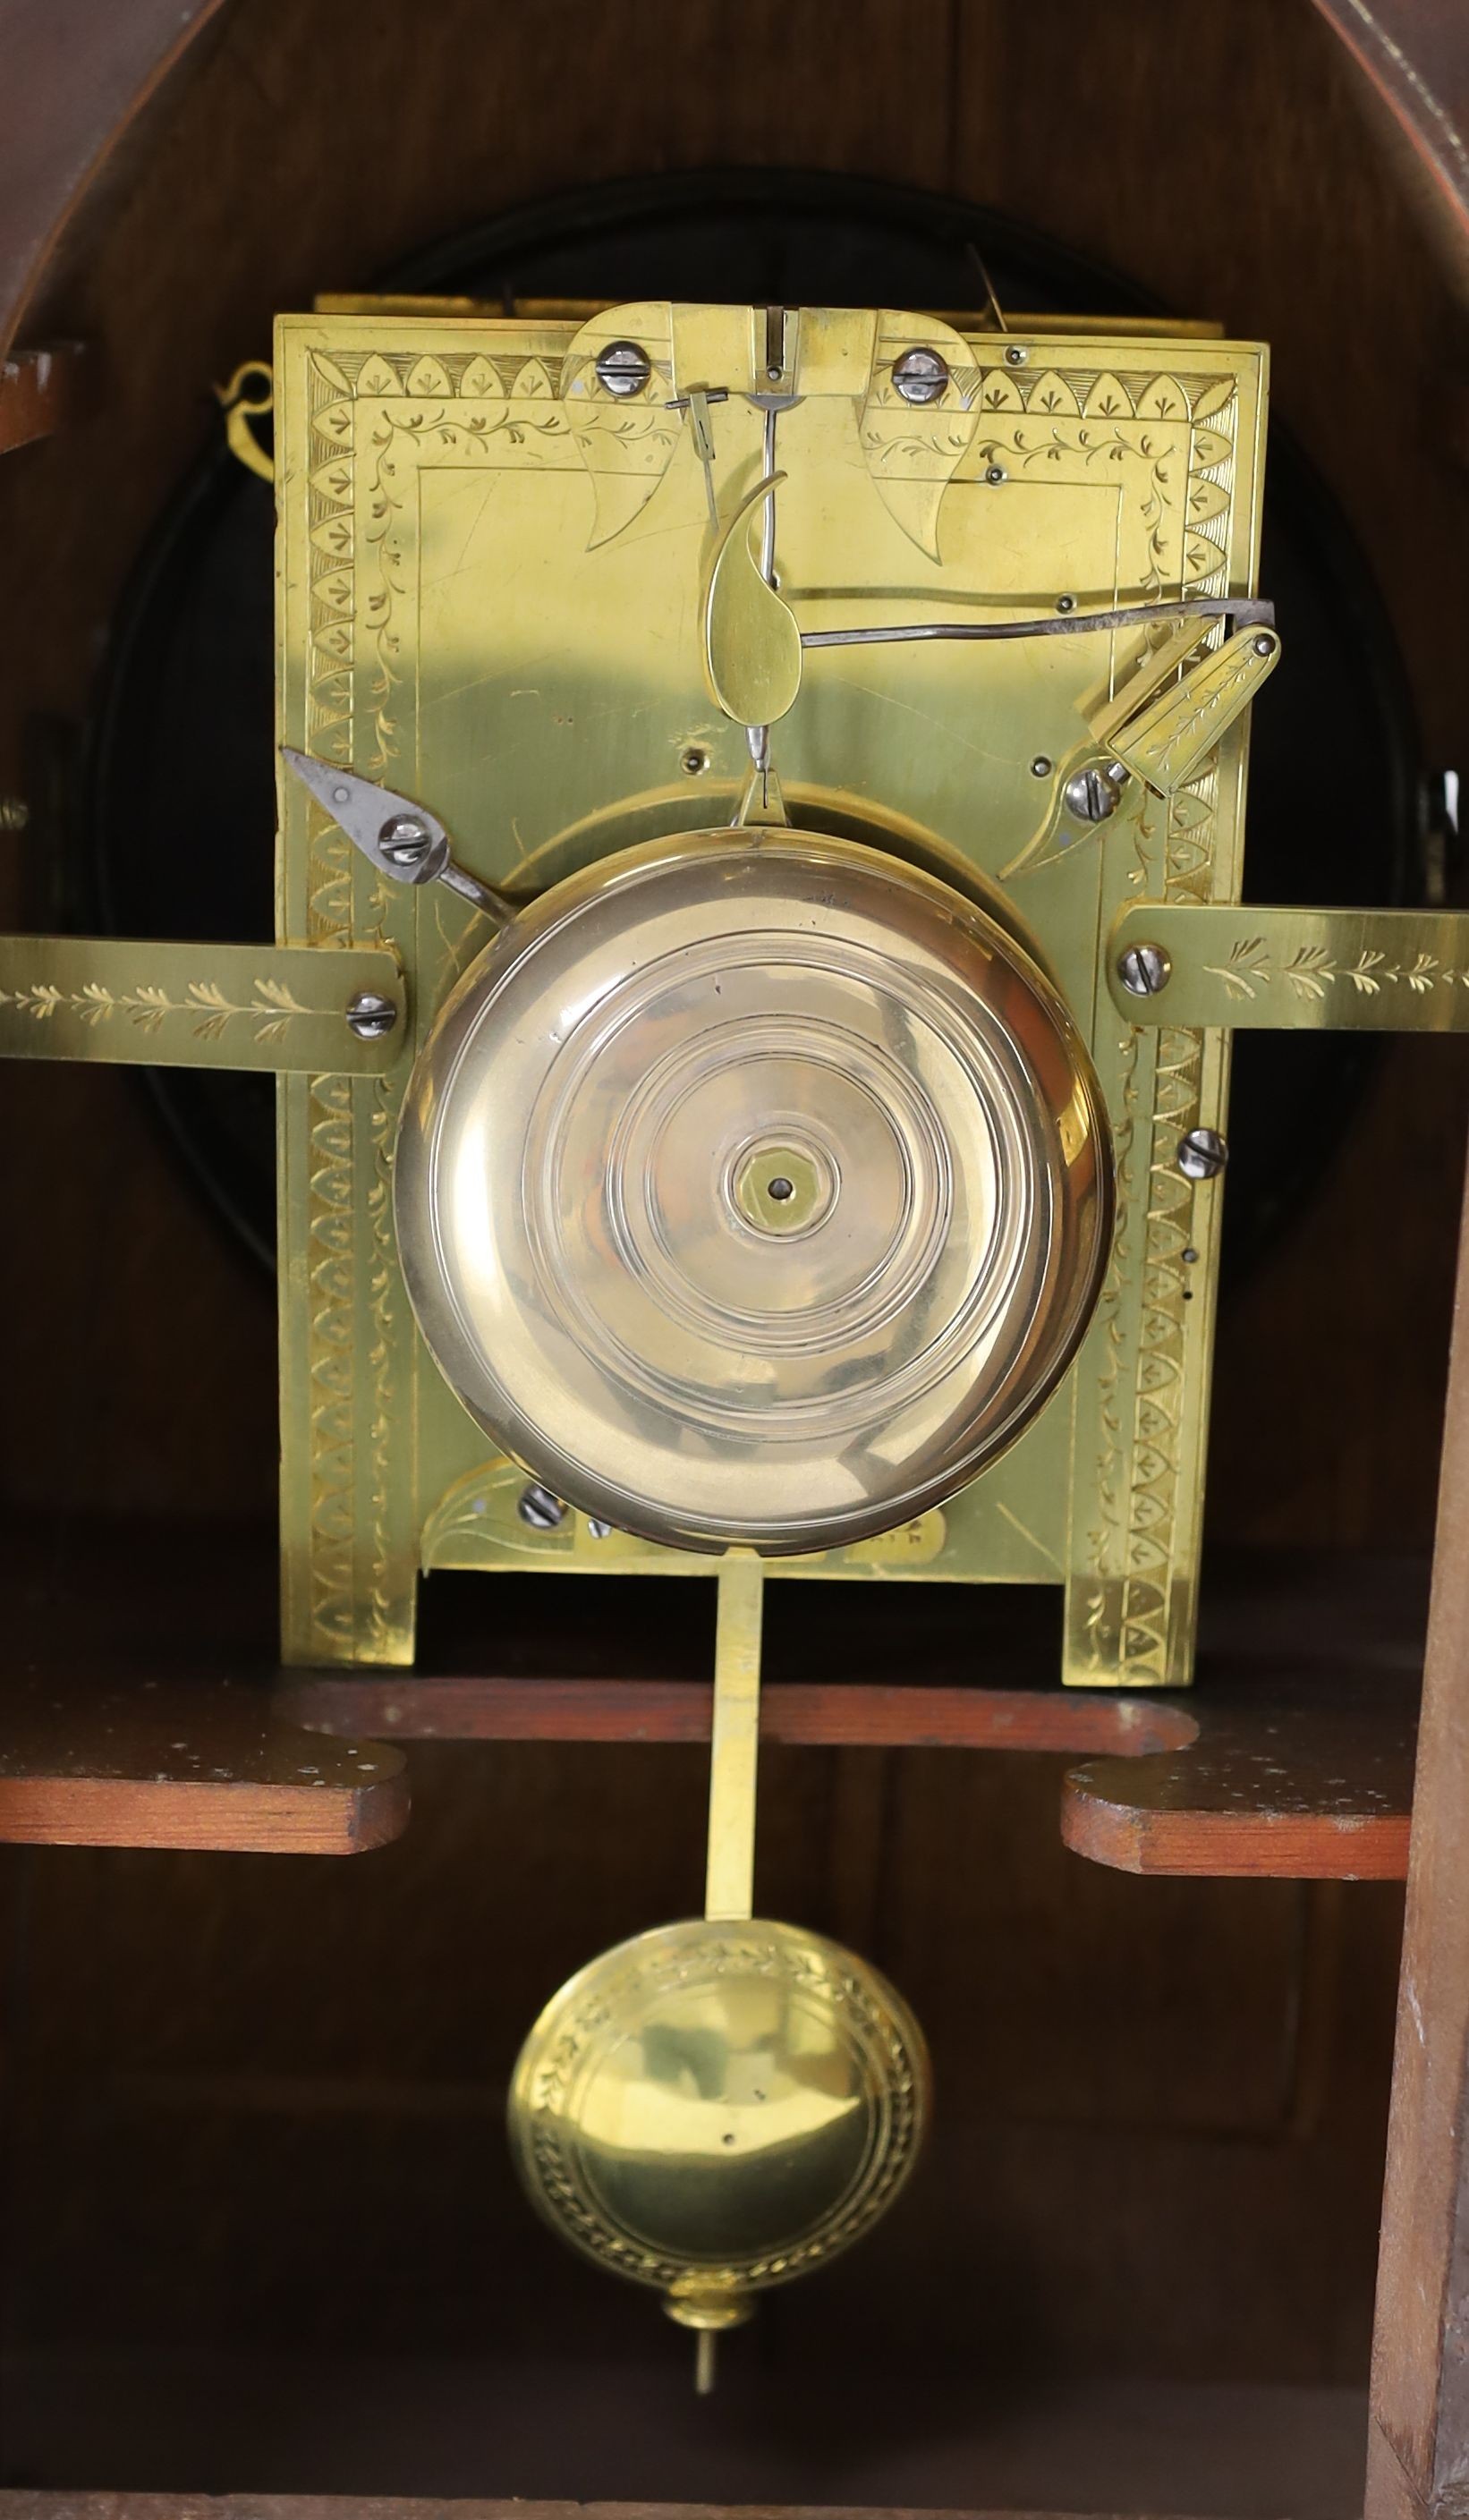 William Storer of London. A Regency parcel ebonised mahogany hour repeating bracket clock, width 29cm depth 18cm height 62cm